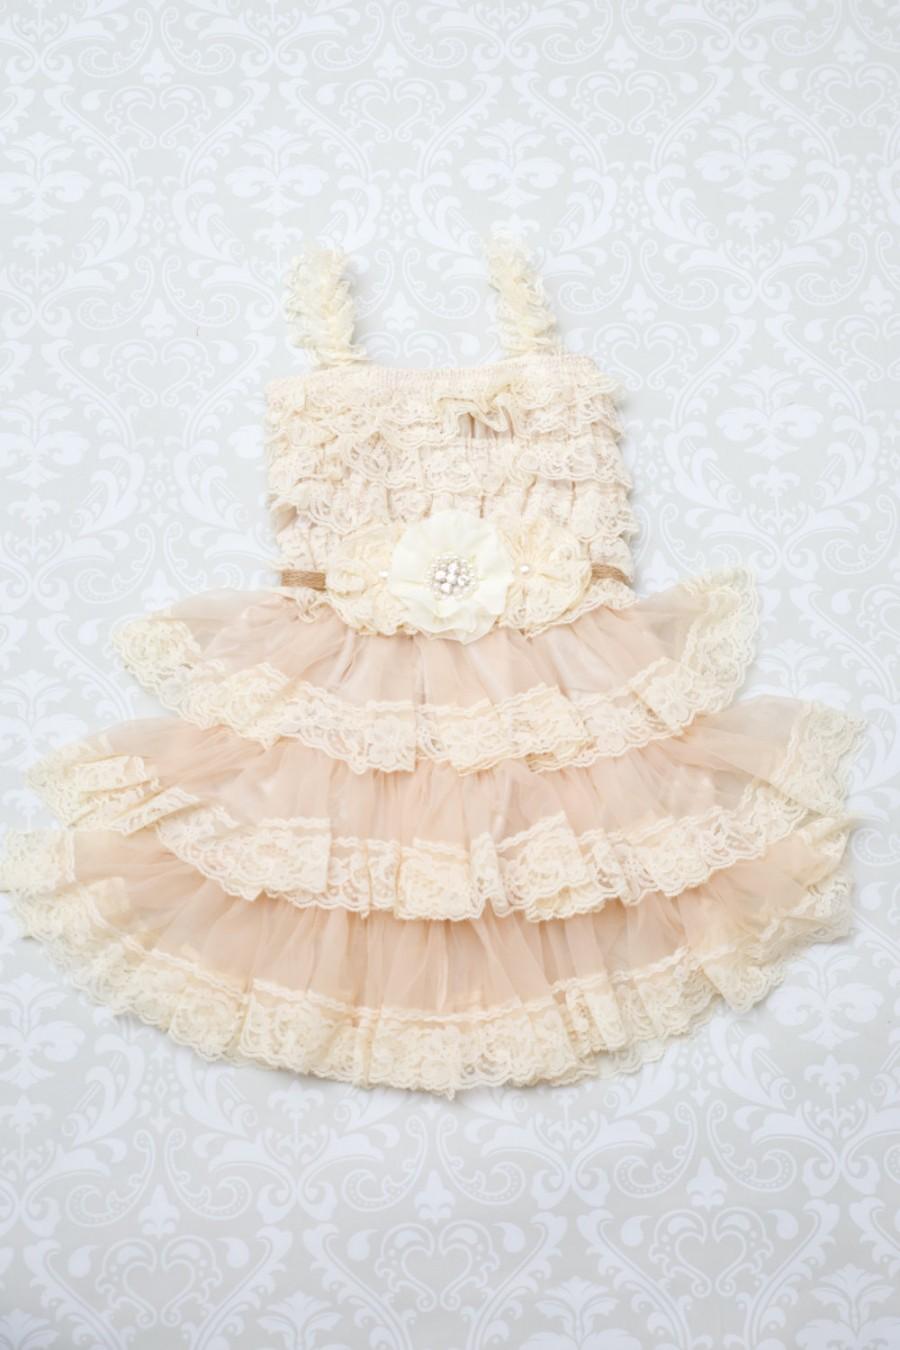 Hochzeit - Ivory Flower Girl Dress/Shabby Chic Flower Girl /Wheat Cream Flower Girl/Country Wedding-lvory-Champagne Flower Girl Dress-Shabby Chic Dress